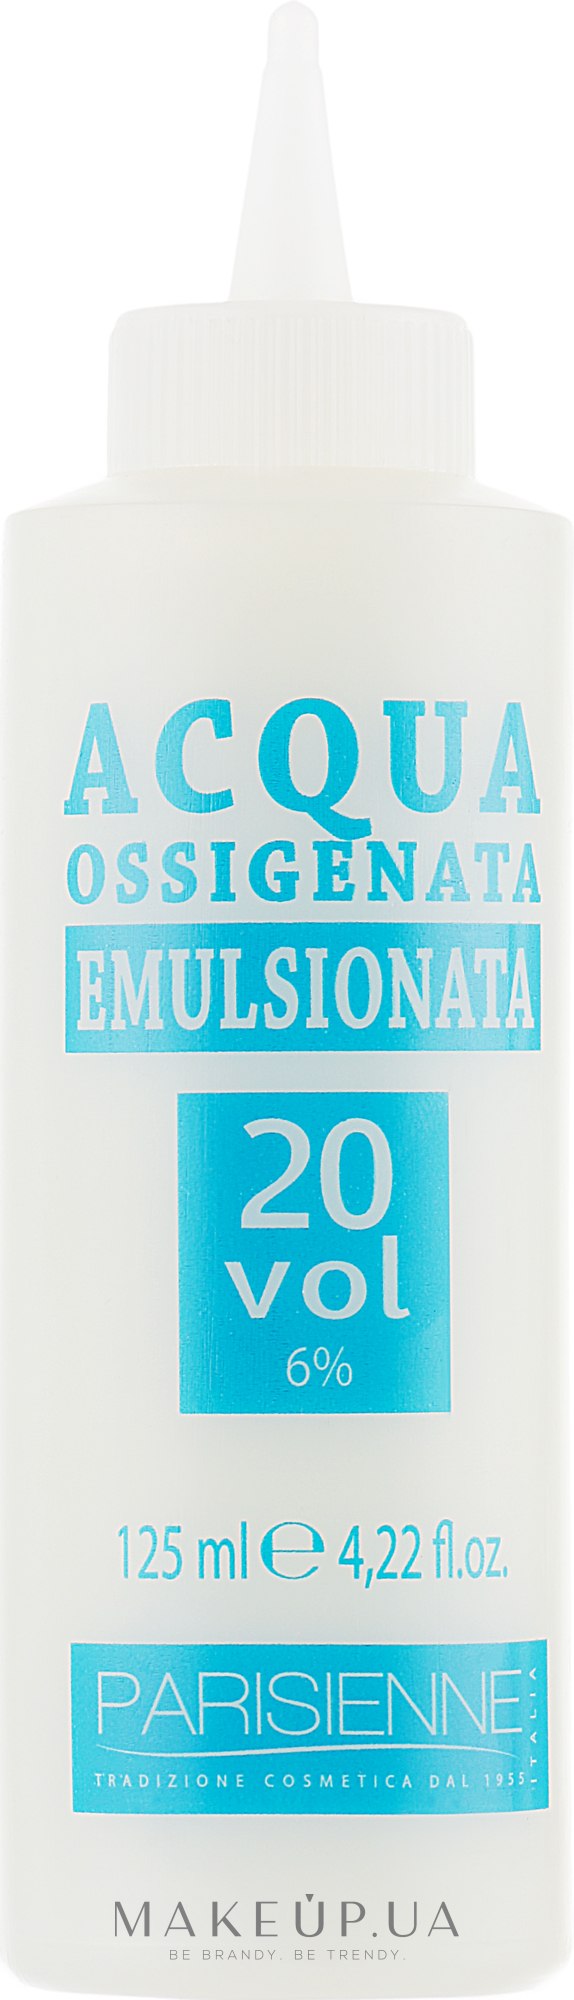 Эмульсионный окислитель 20 Vol - Parisienne Italia Acqua Ossigenata Emulsionata — фото 125ml